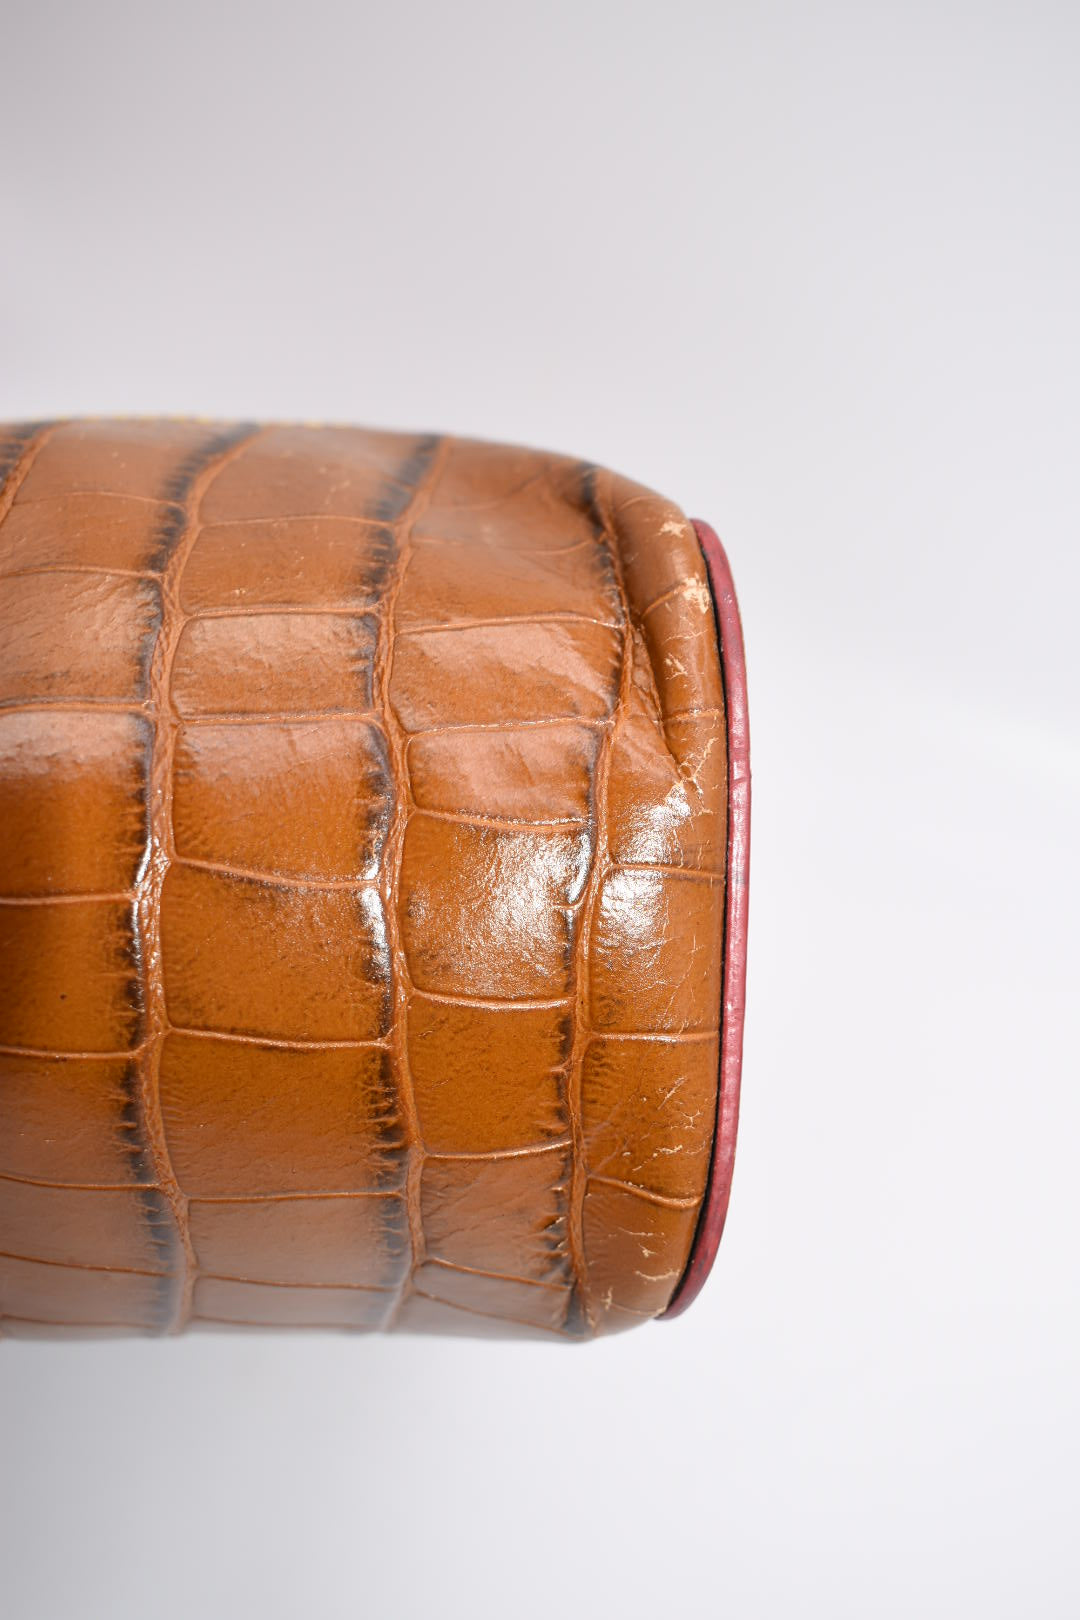 Dooney & Bourke Croc Embossed Leather Tote Bag